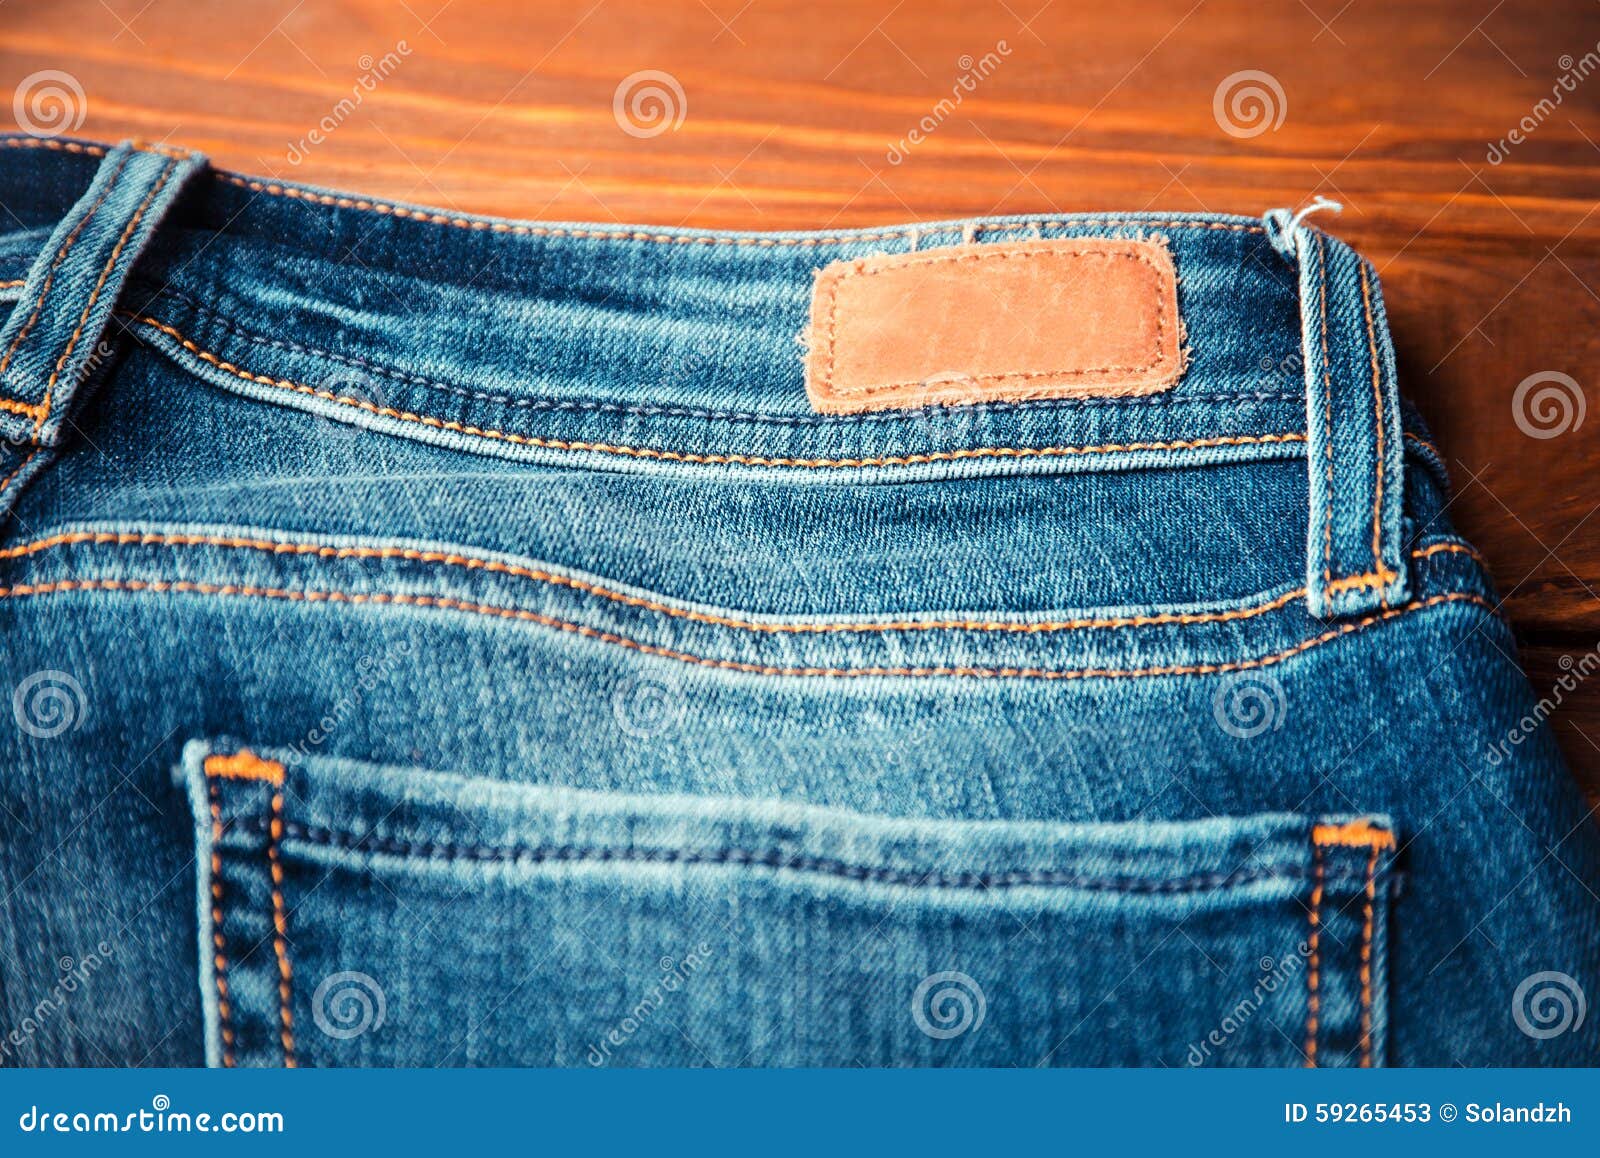 Details 66+ half jeans half leather pants - in.eteachers